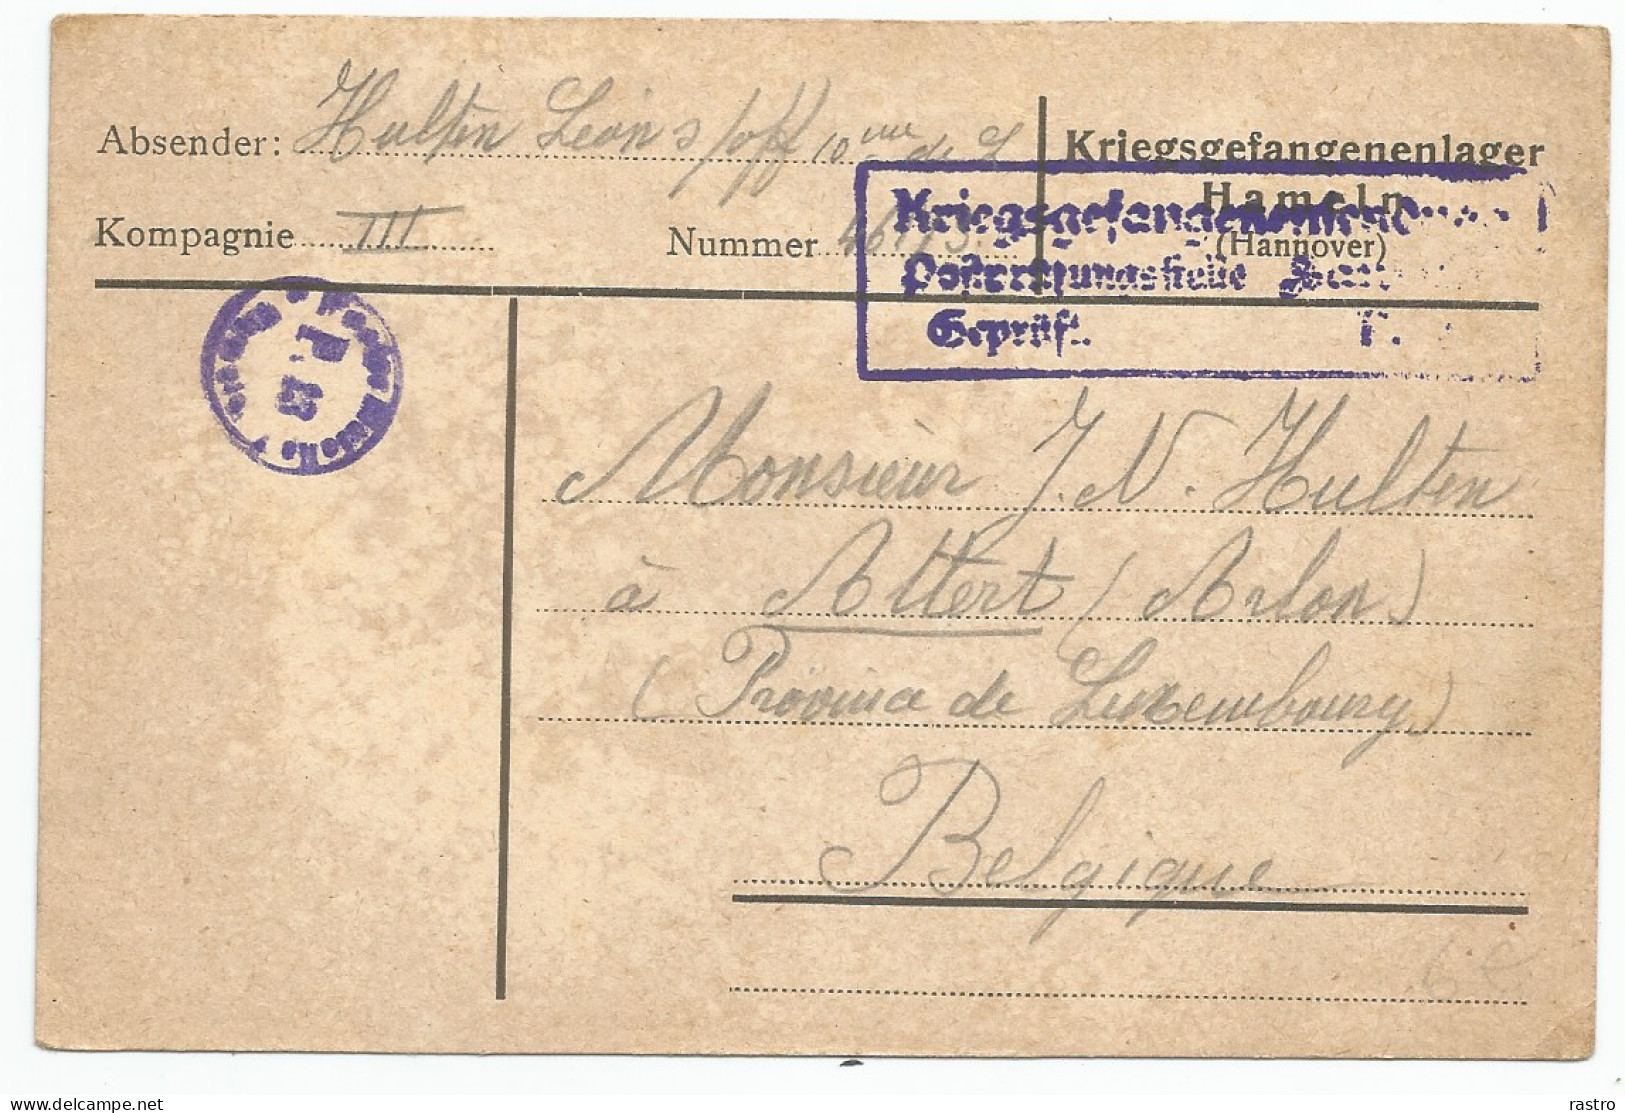 Courrier En Franchise De Prisonnier Belge Du Camp De Hameln (Hanovre) Vers Attert (1917)  Visas De Censure Du Camp - Kriegsgefangenschaft